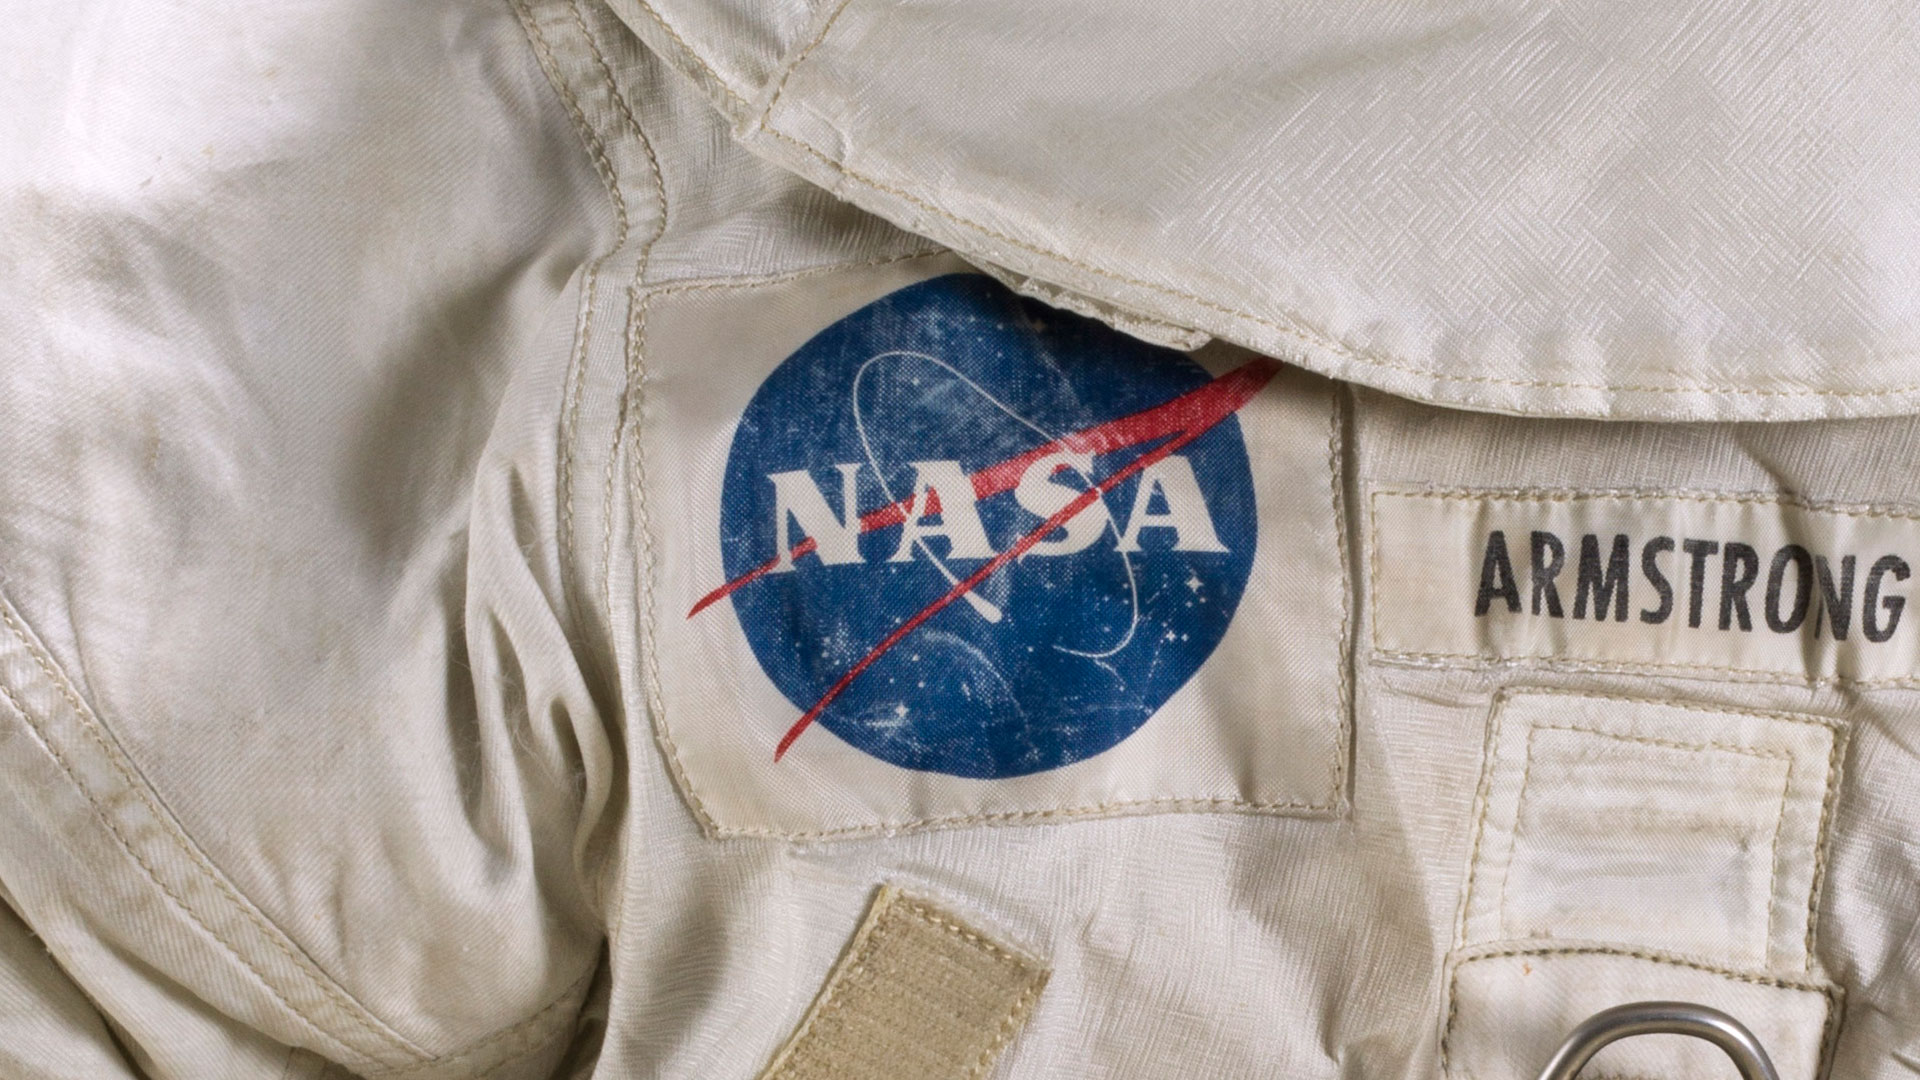  'Meatball' milestone: NASA's original logo still soars after 65 years 